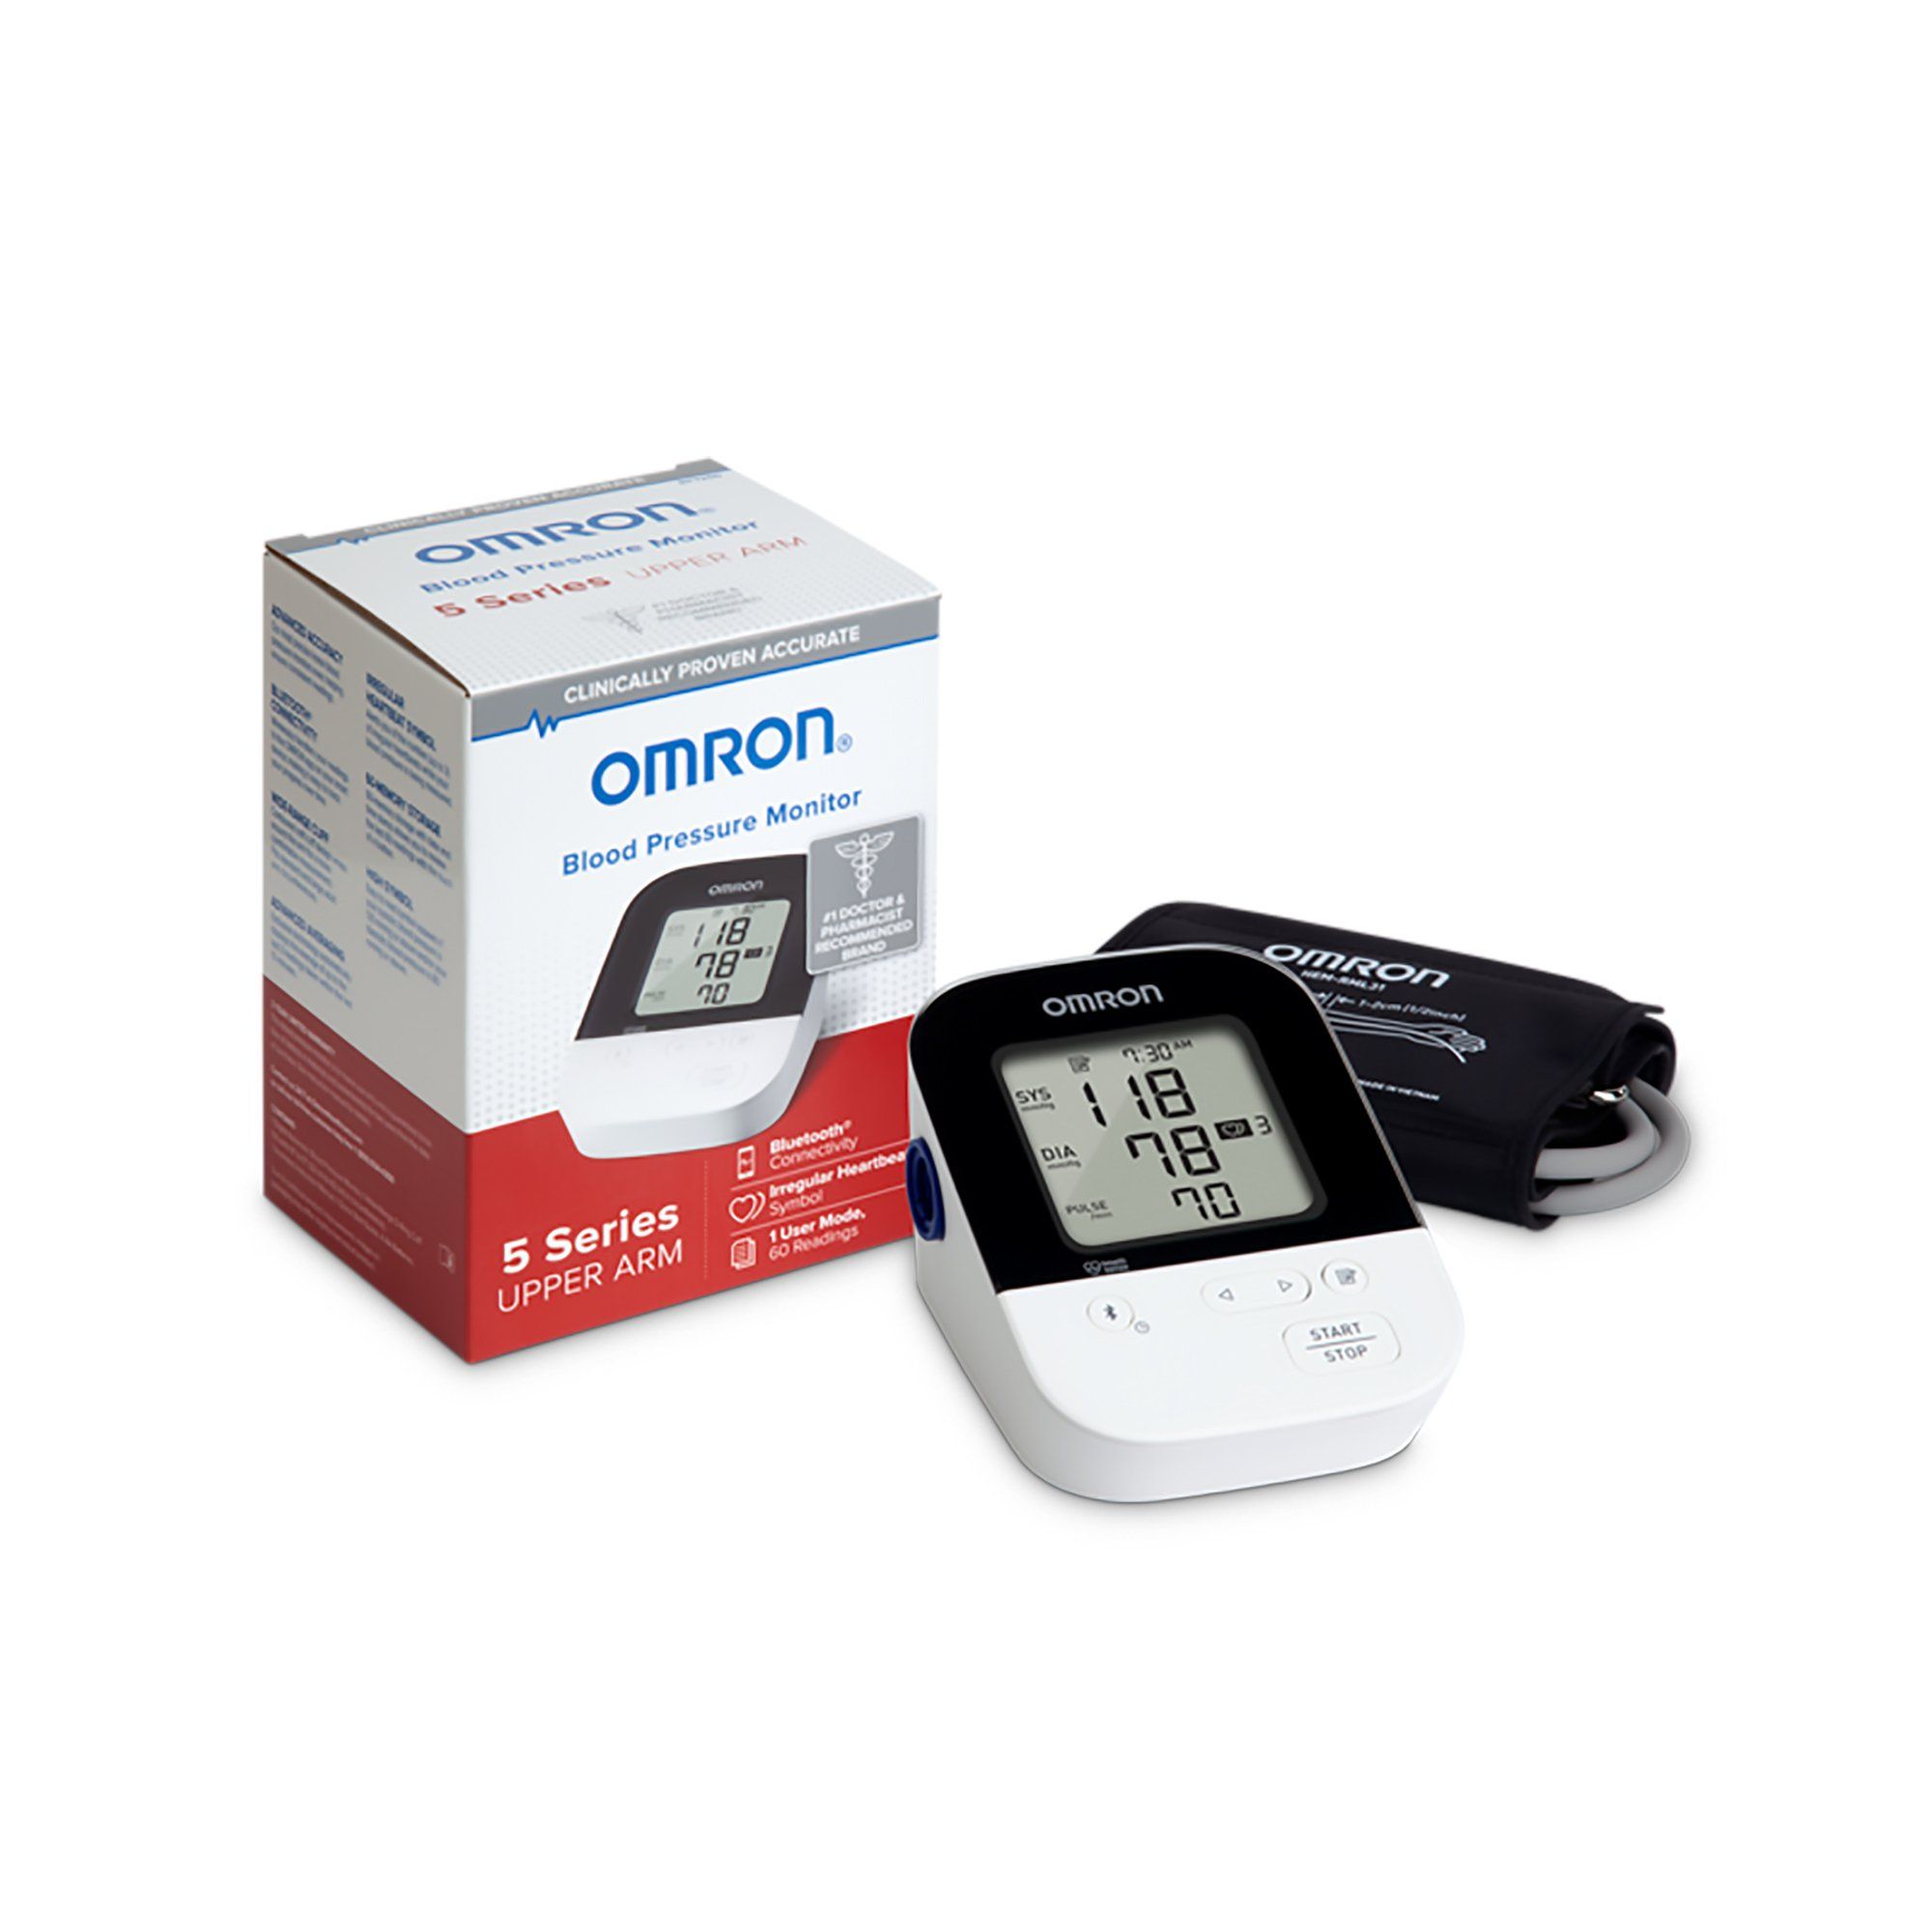 Omron 5 Series Automatic Digital Upper Arm Blood Pressure Monitor - Black